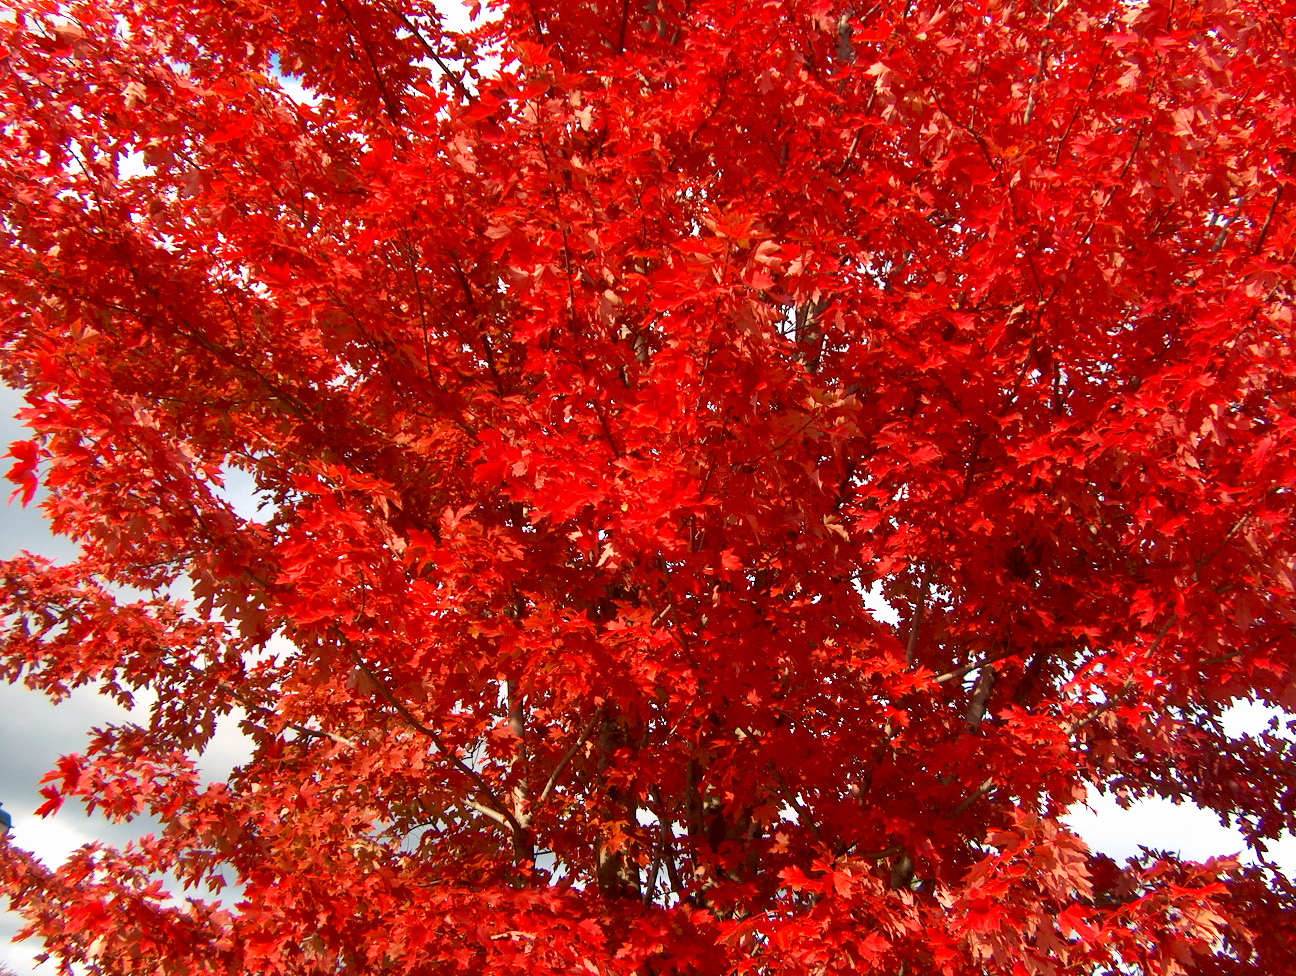 Acer x freemanii 'Autumn Blaze' / Autumn Blaze Maple